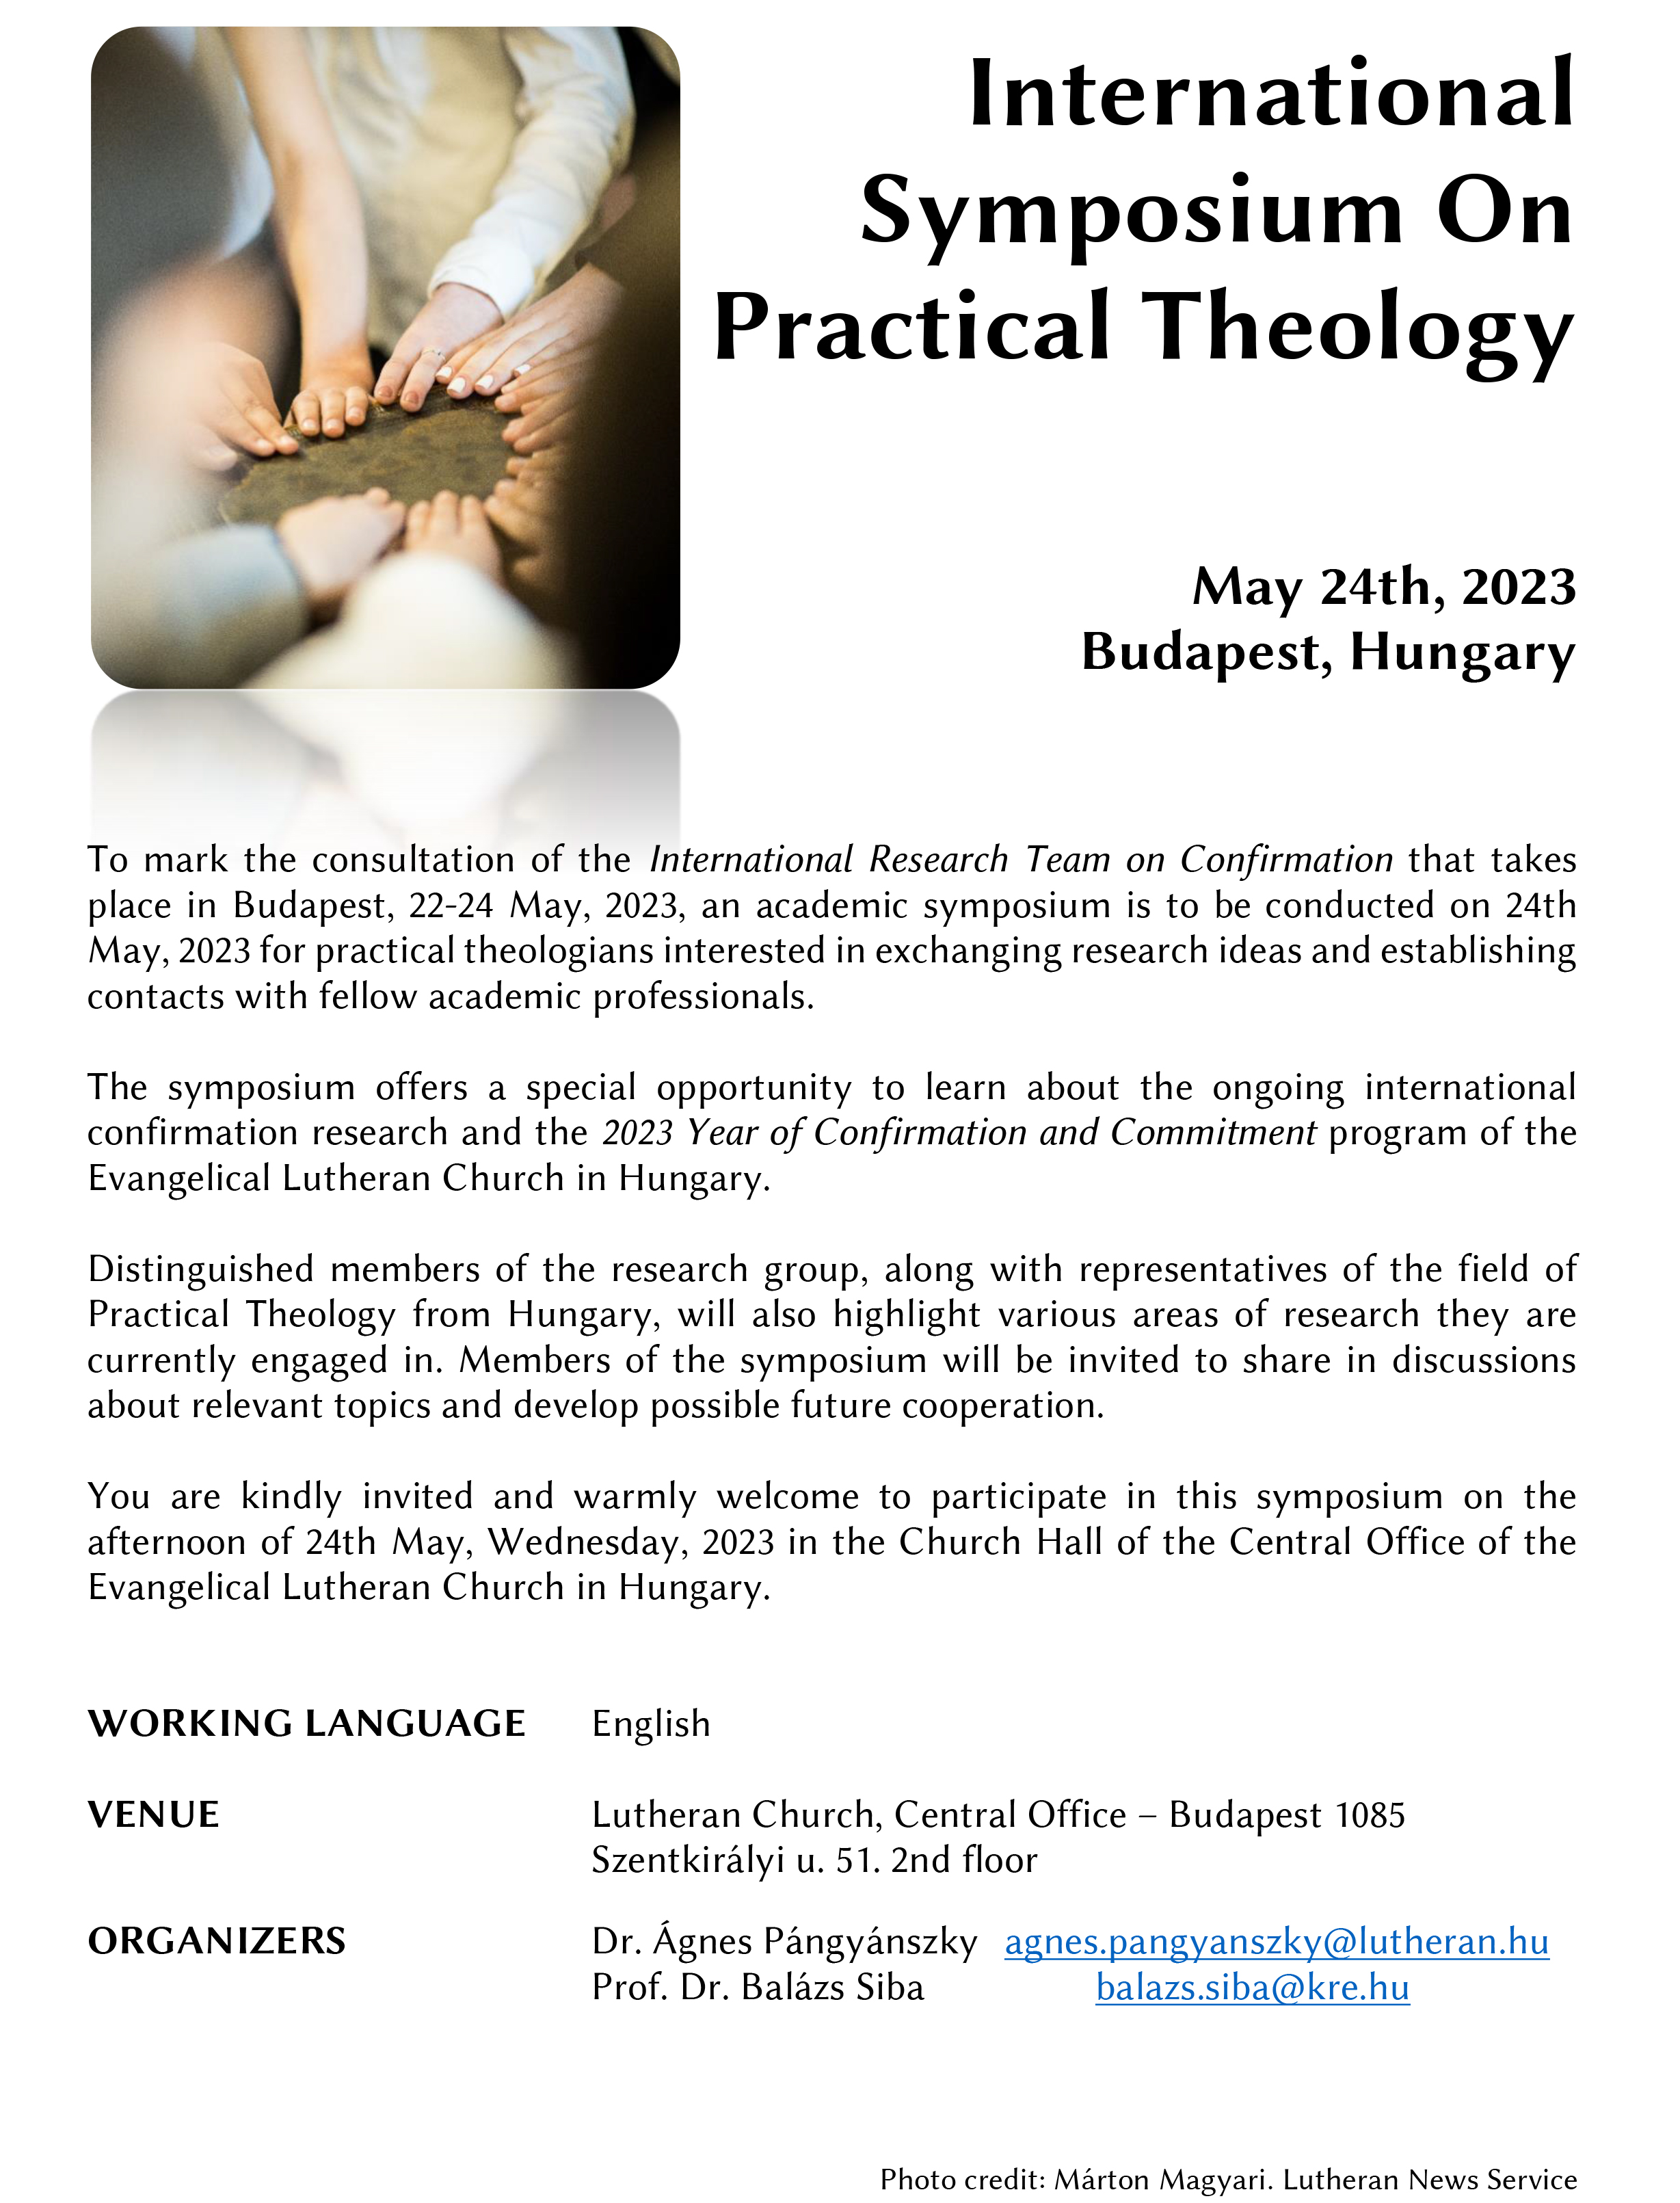 actical Theology - May 20th, 2023 Budapest, Hungary - Lutheran Church, Central Office - Budapest 1085m Szentkirályi u. 51. 2nd floor